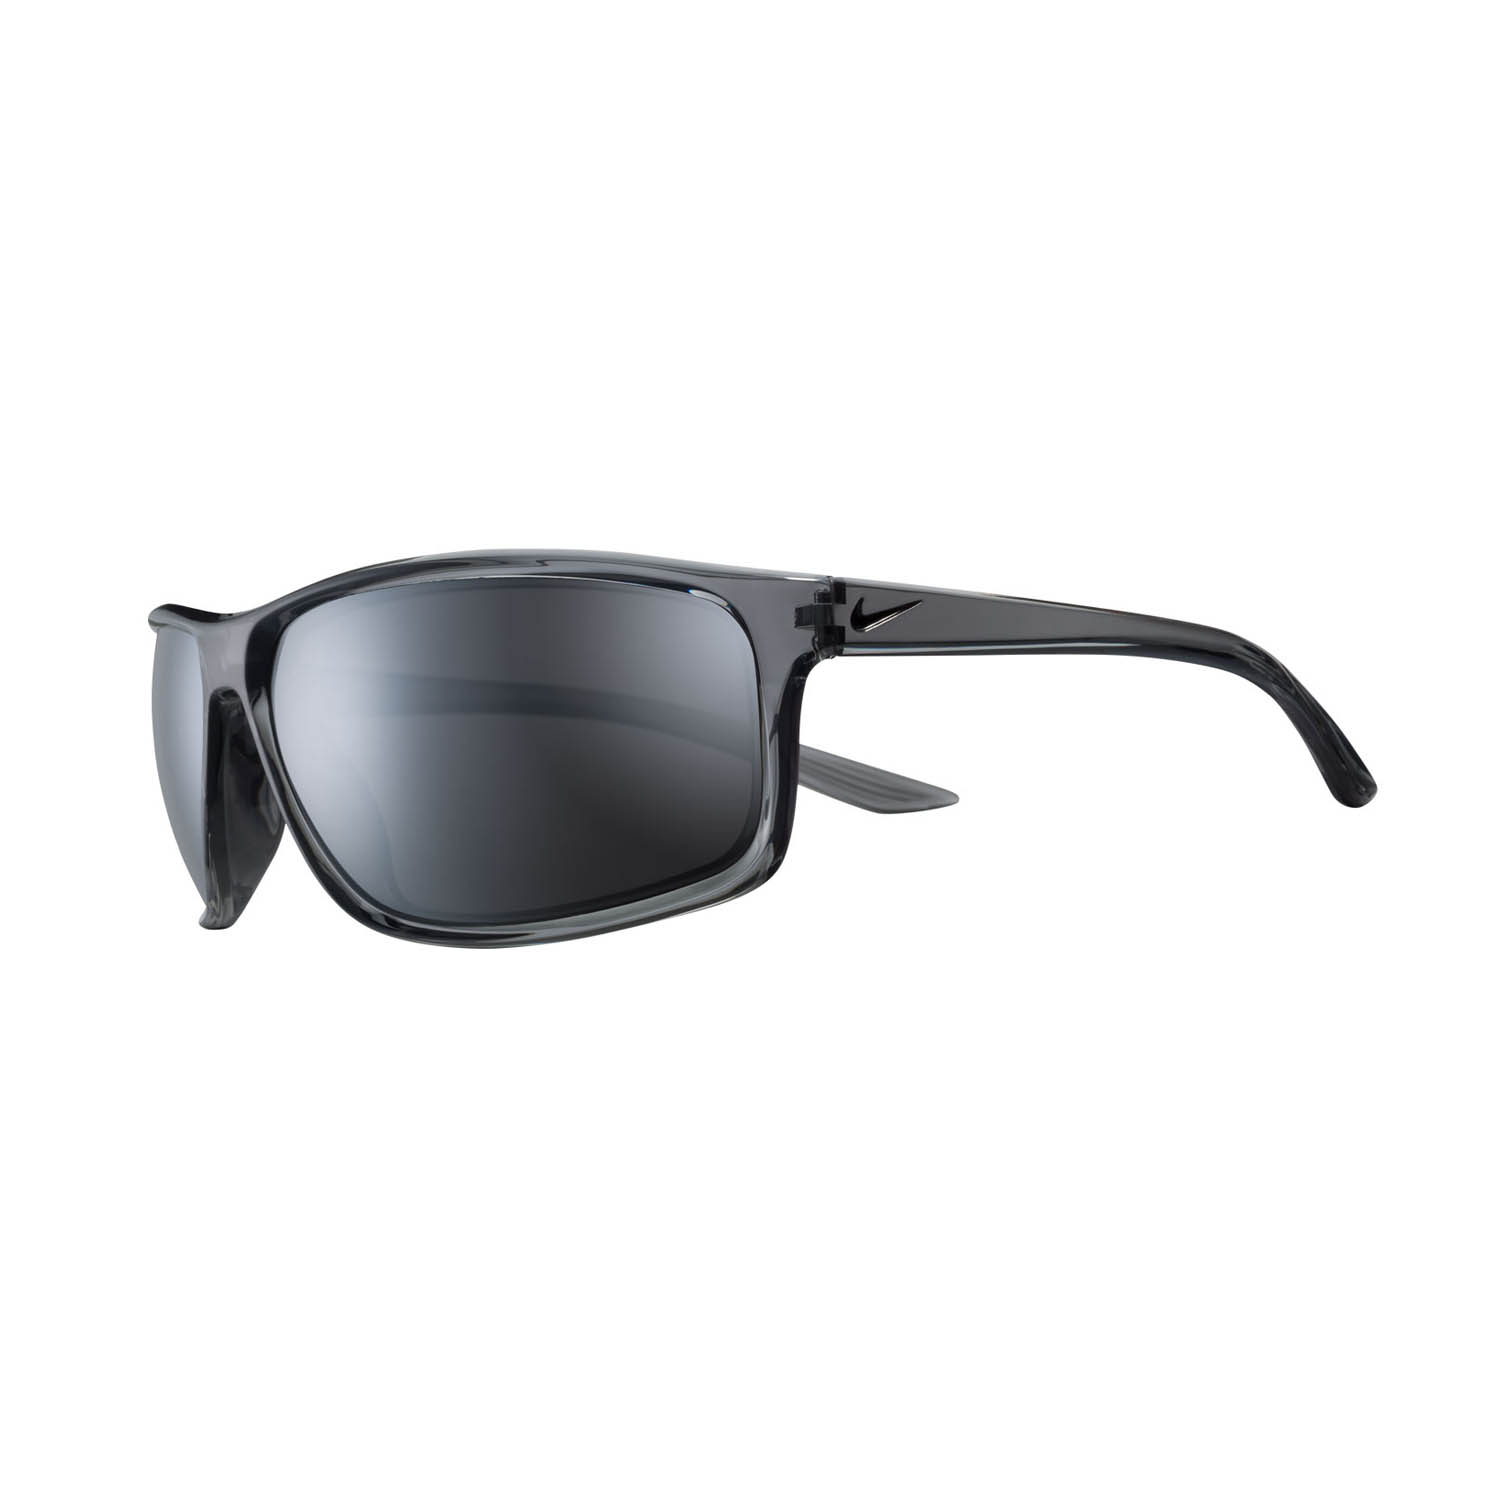 Nike Adrenaline Sunglasses - Cool Grey/Black/Grey W/Silver Mirror Lens